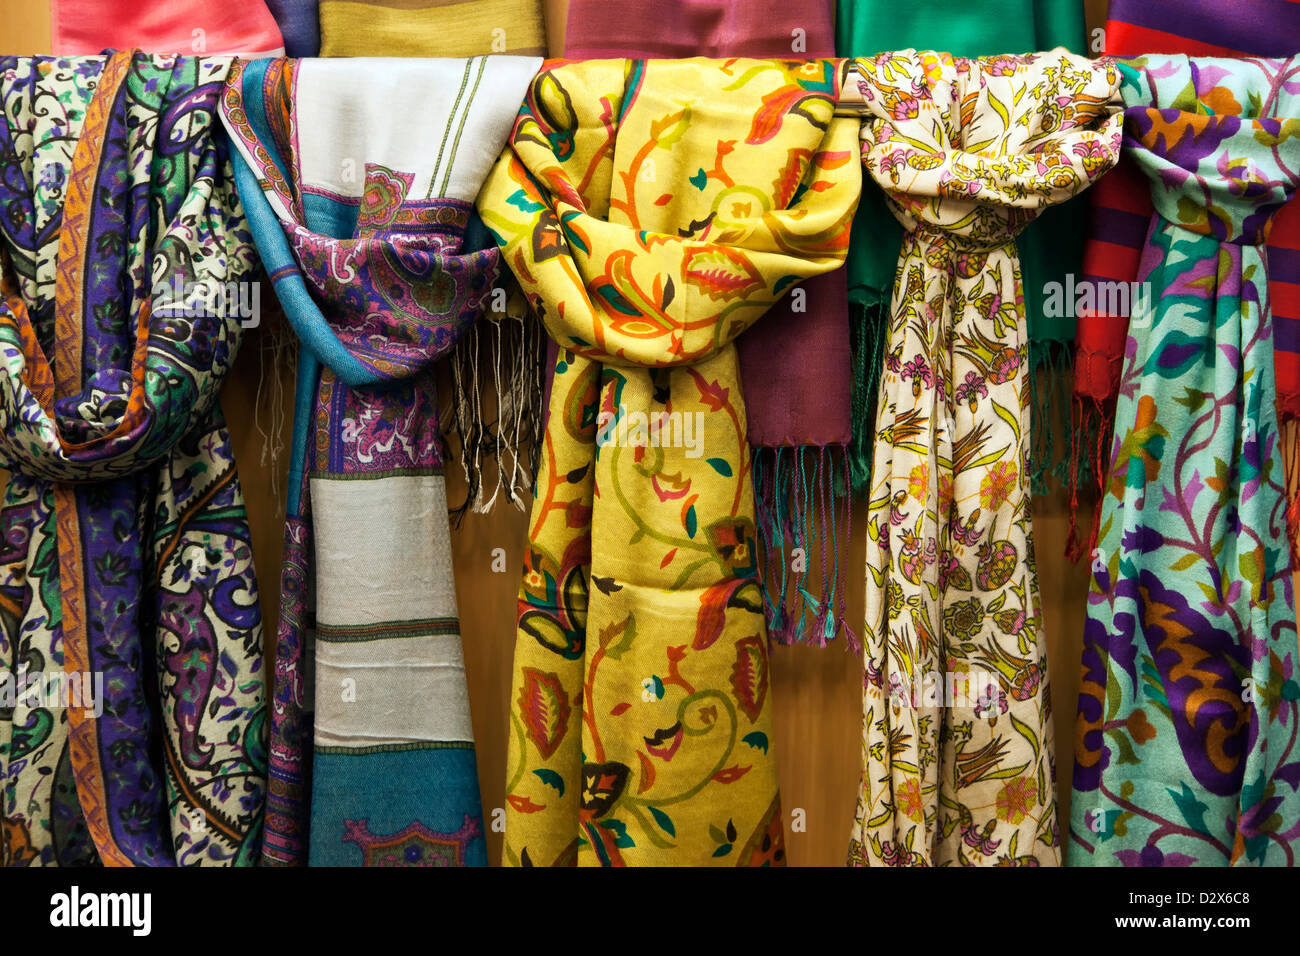 Clothing market istanbul turkey hi-res stock photography and images - Alamy